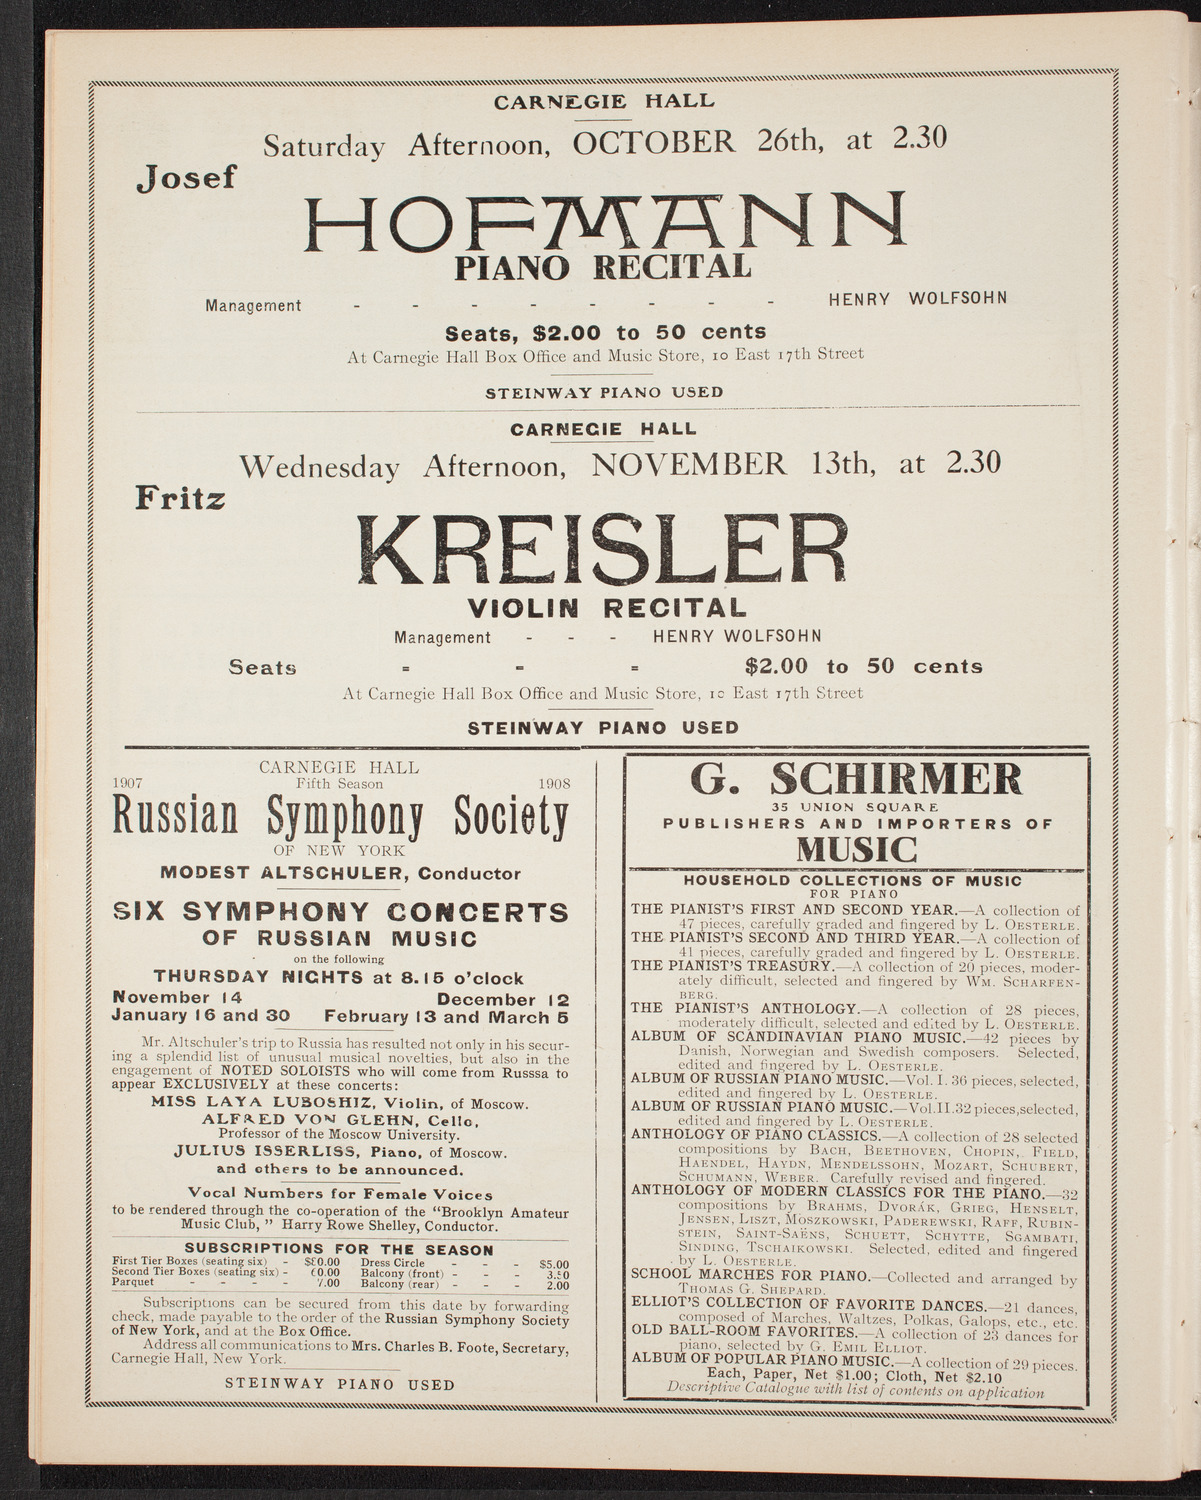 Rhondda Valley Male Concert Party, October 7, 1907, program page 8